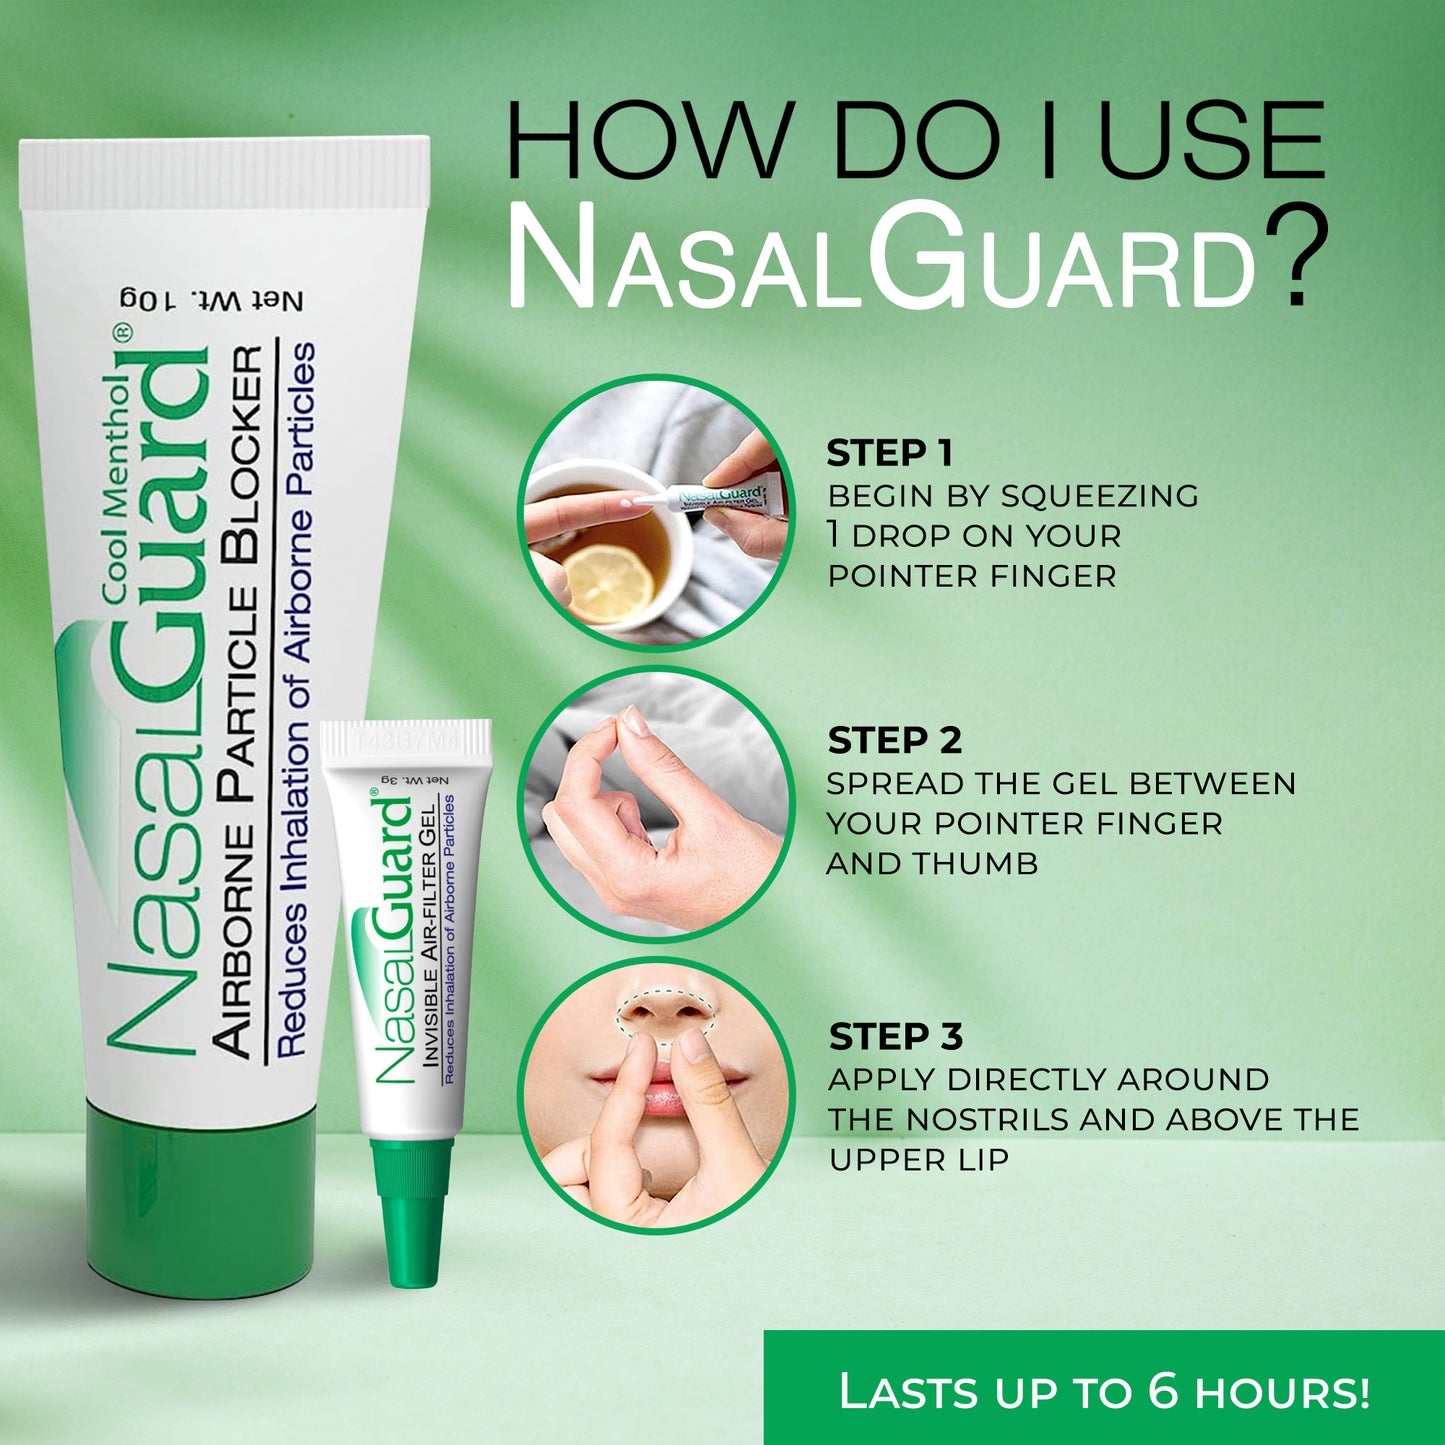 NasalGuard Fine Mist Nasal Spray - Drug-Free, Daily Use (Cool Menthol)